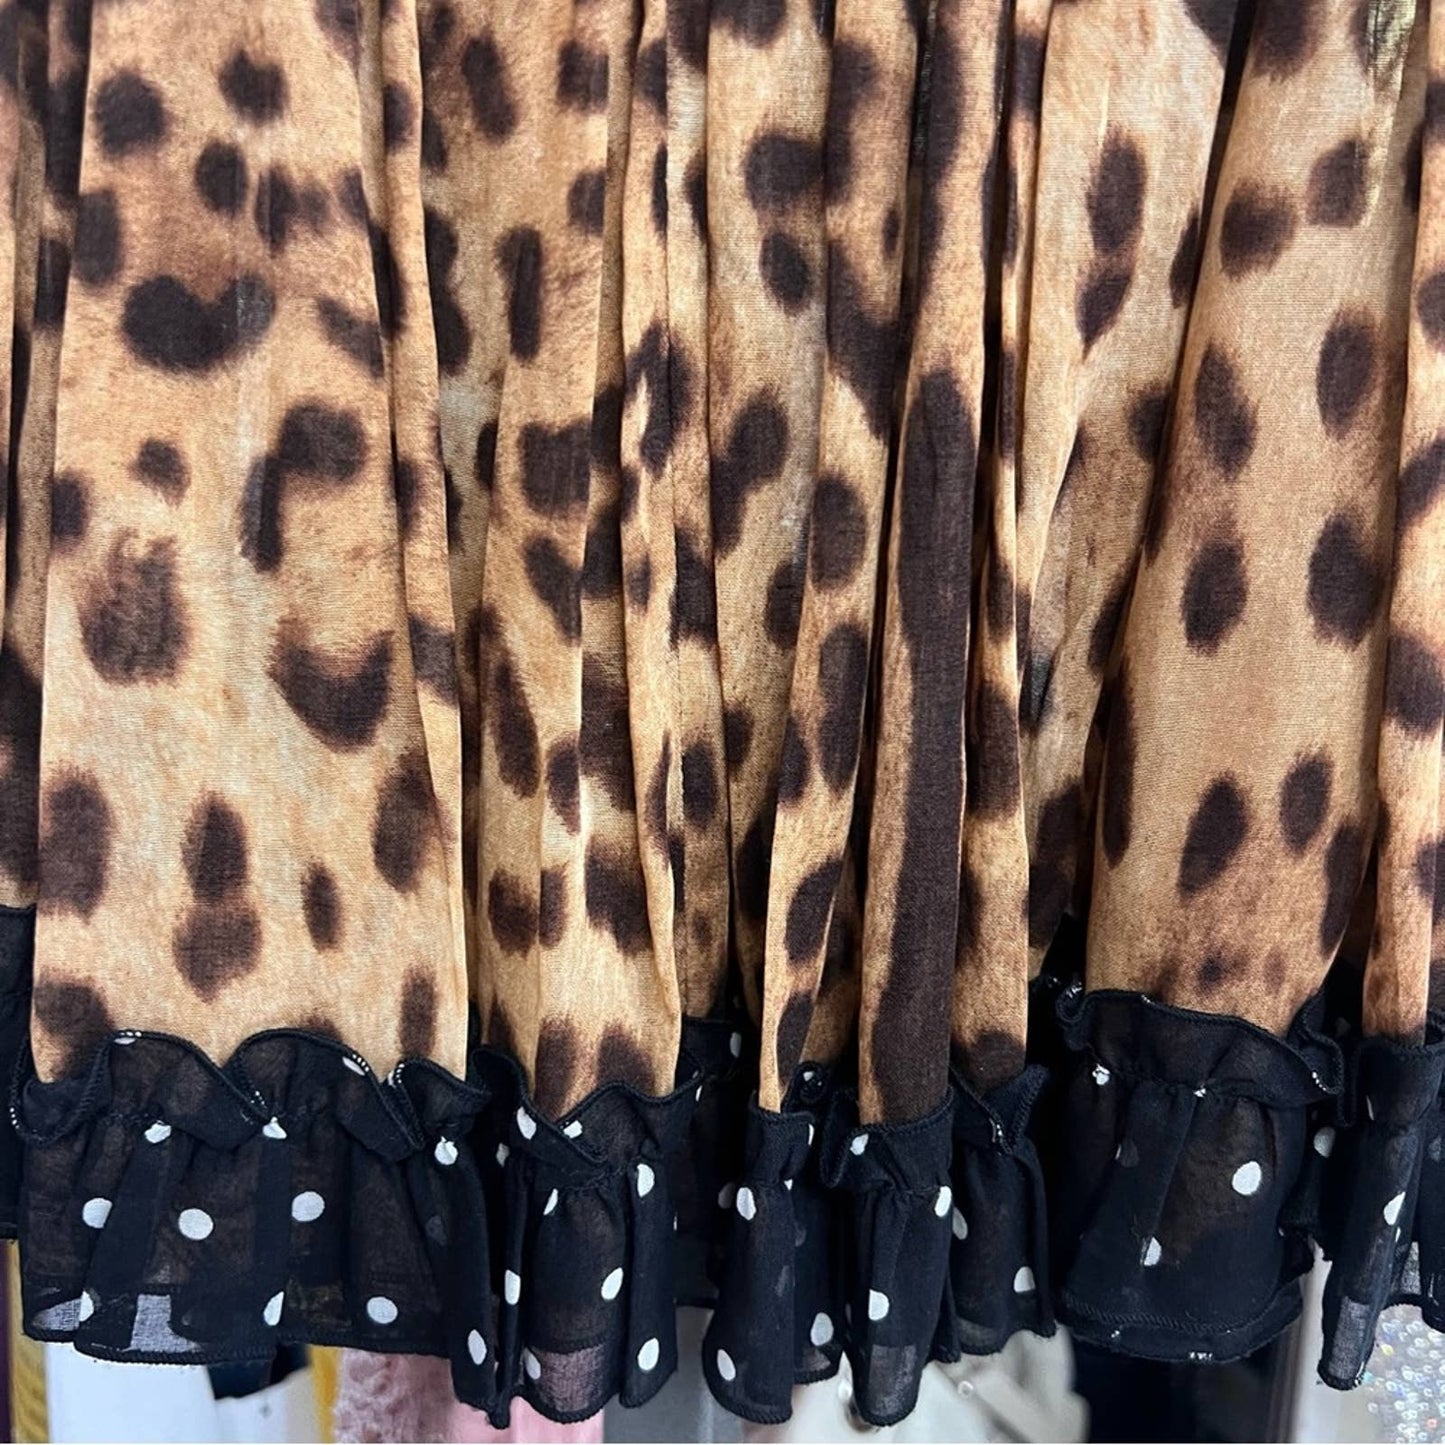 D&G Animal Print Cotton Flare Skirt • 38 XS